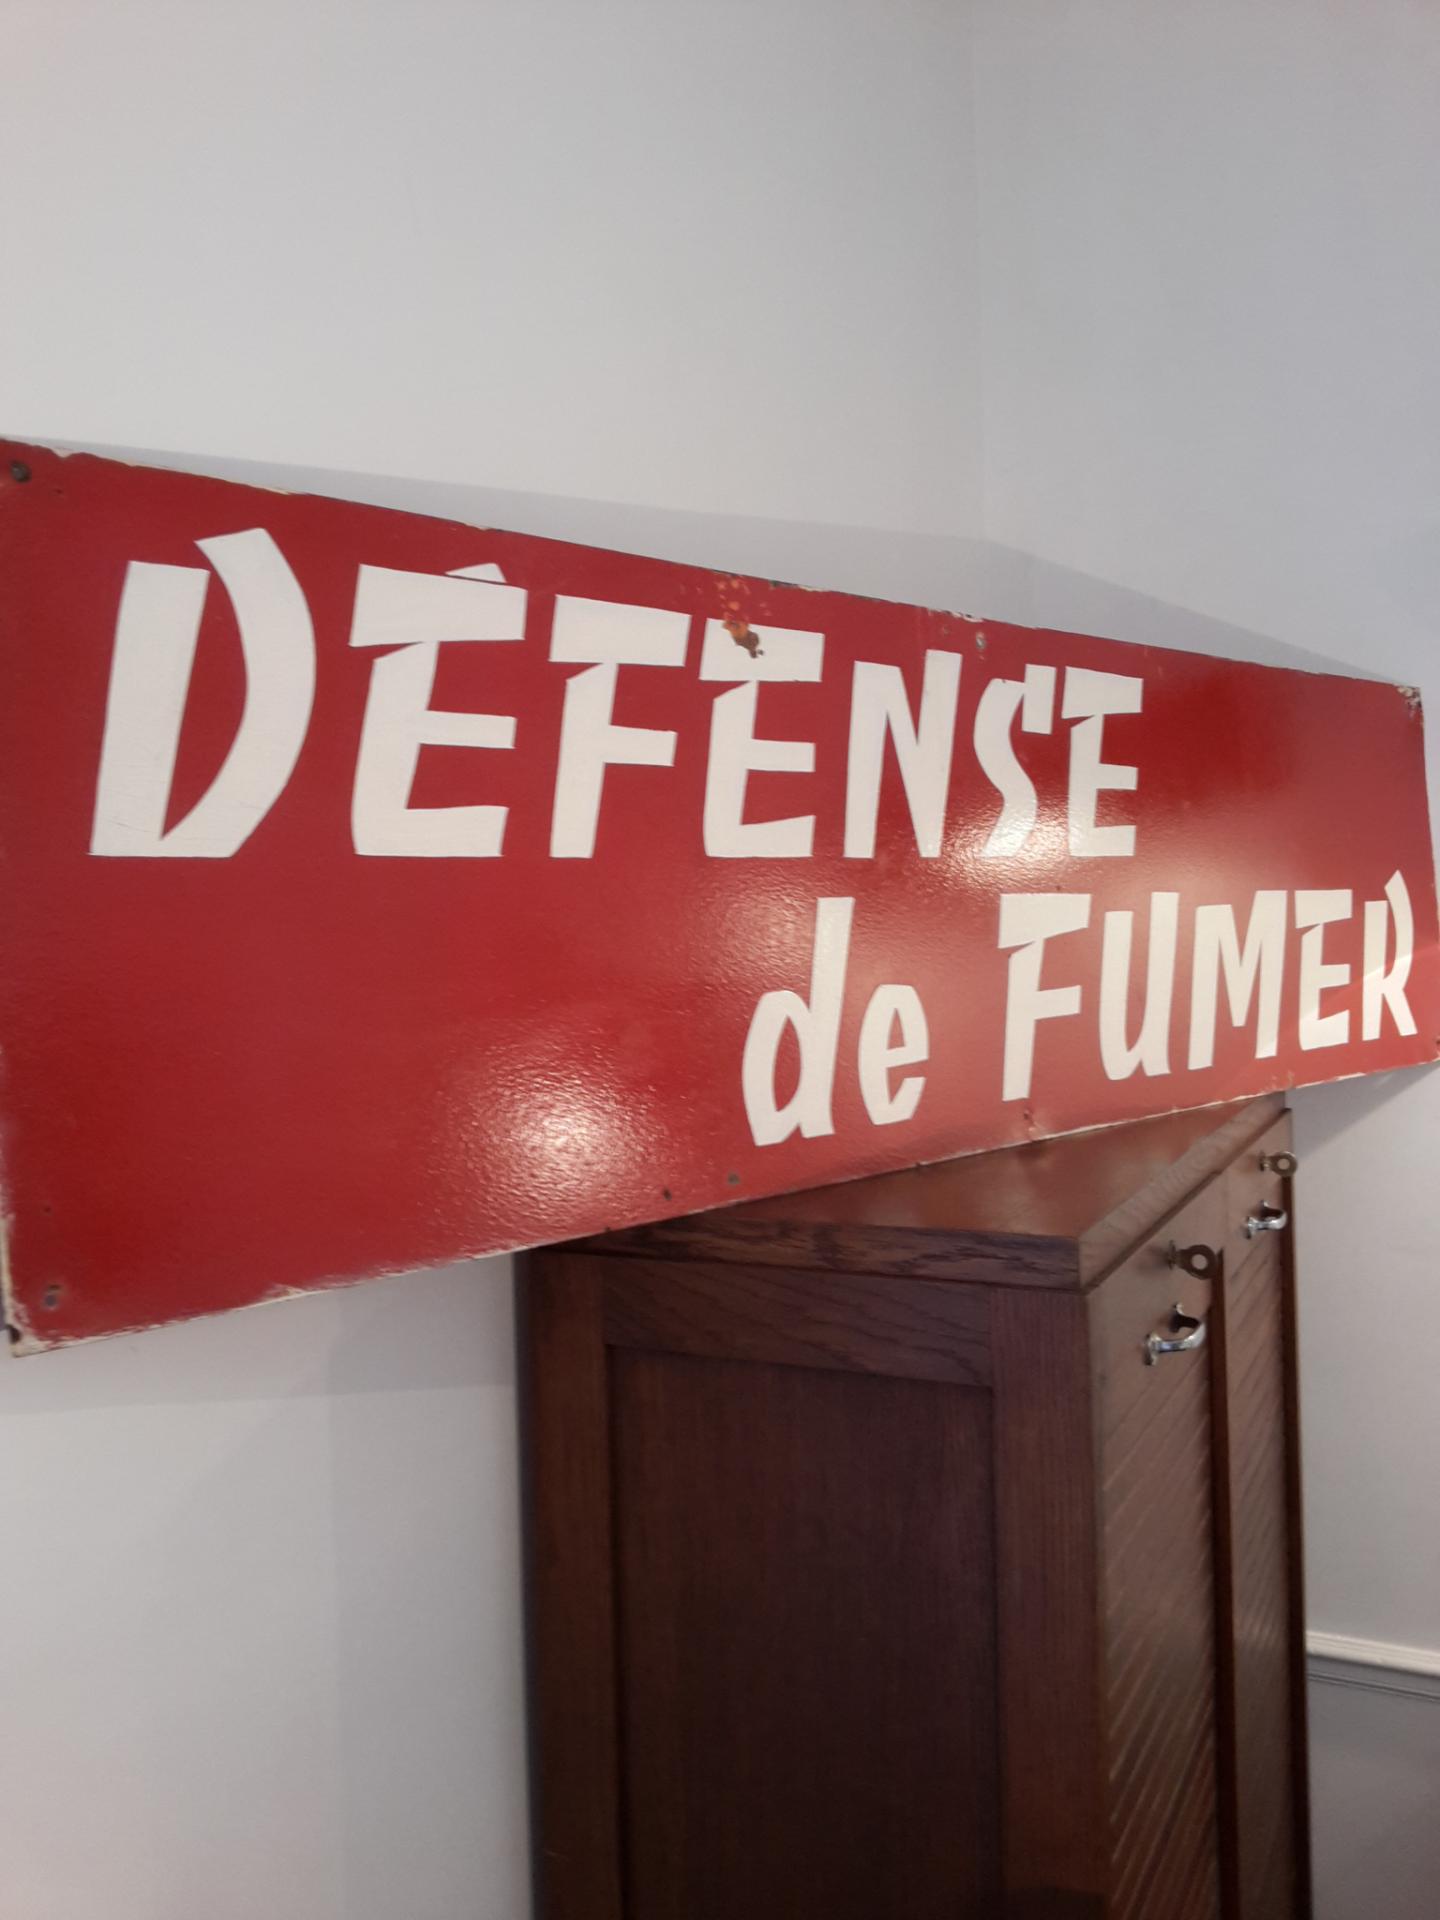 1 defense fumer